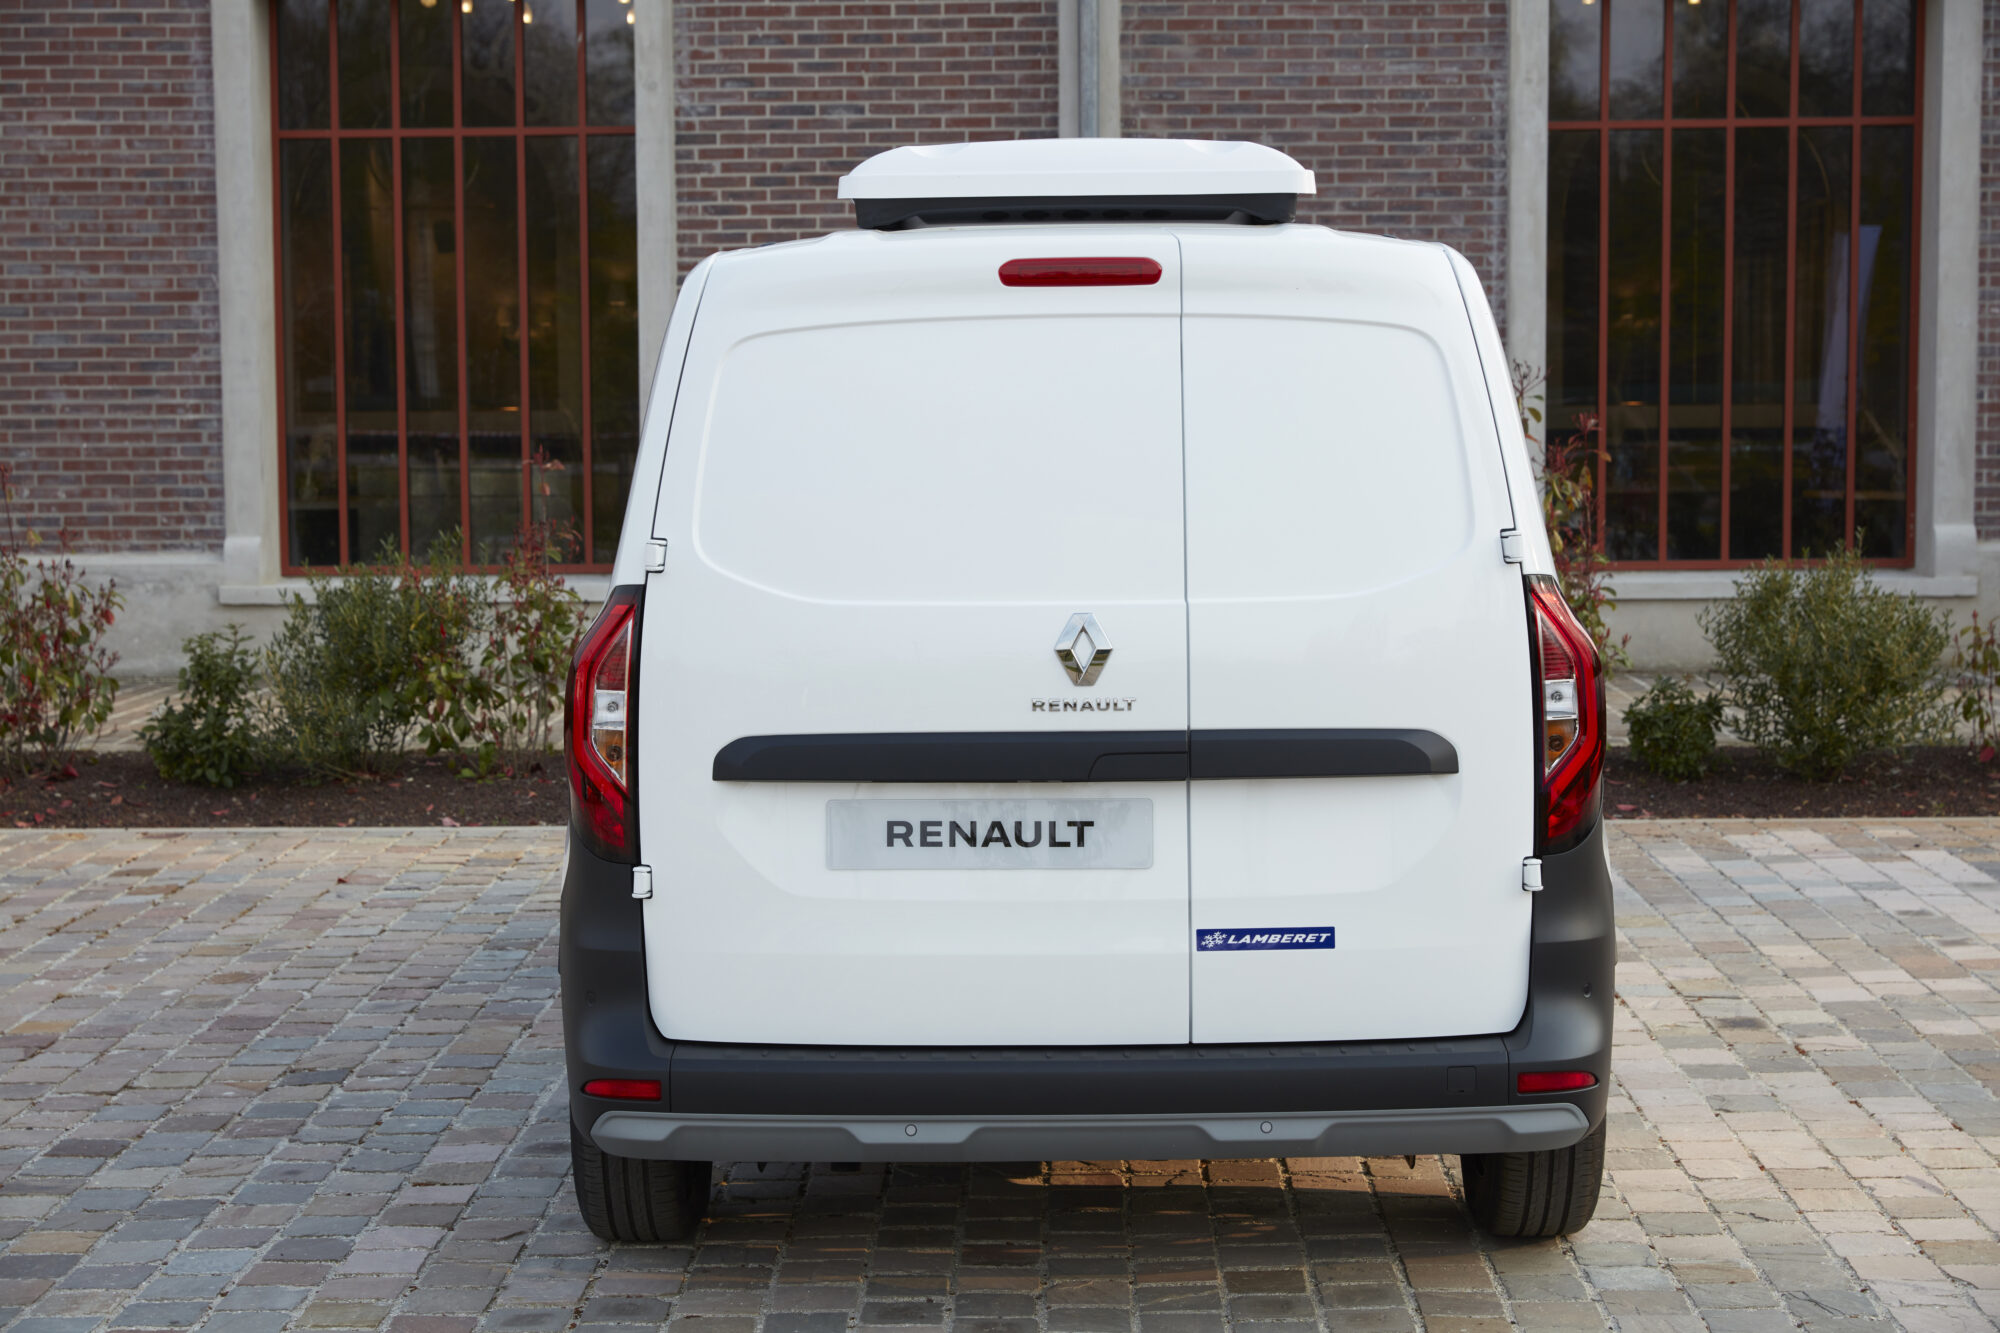 2021 - Nouveau Renault Kangoo Van - Essais presse - Véhicules transformés